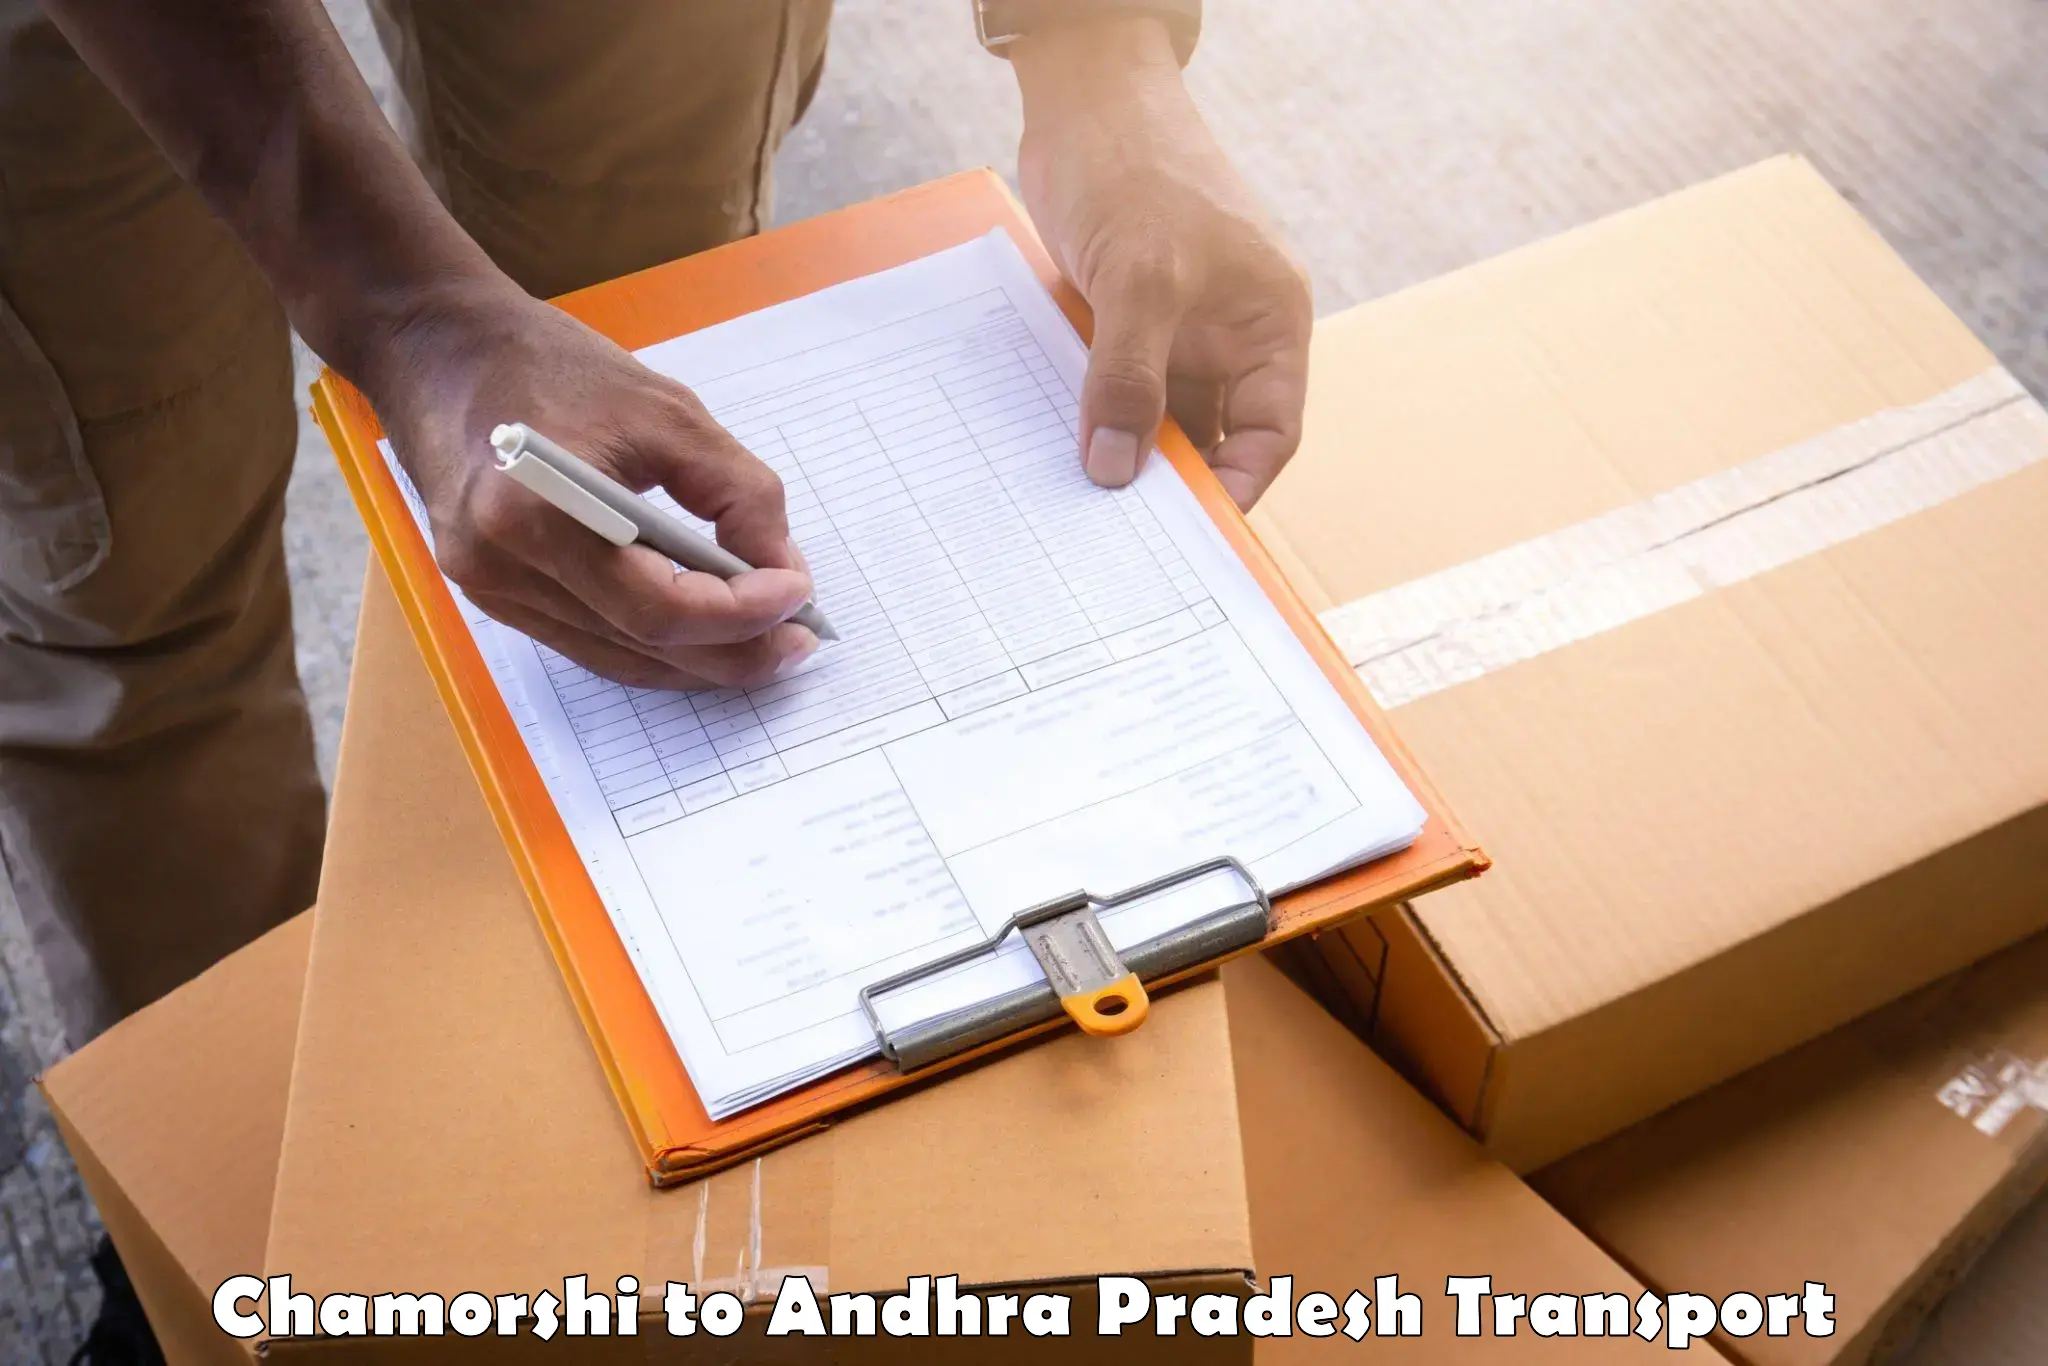 Container transport service Chamorshi to Tripuranthakam